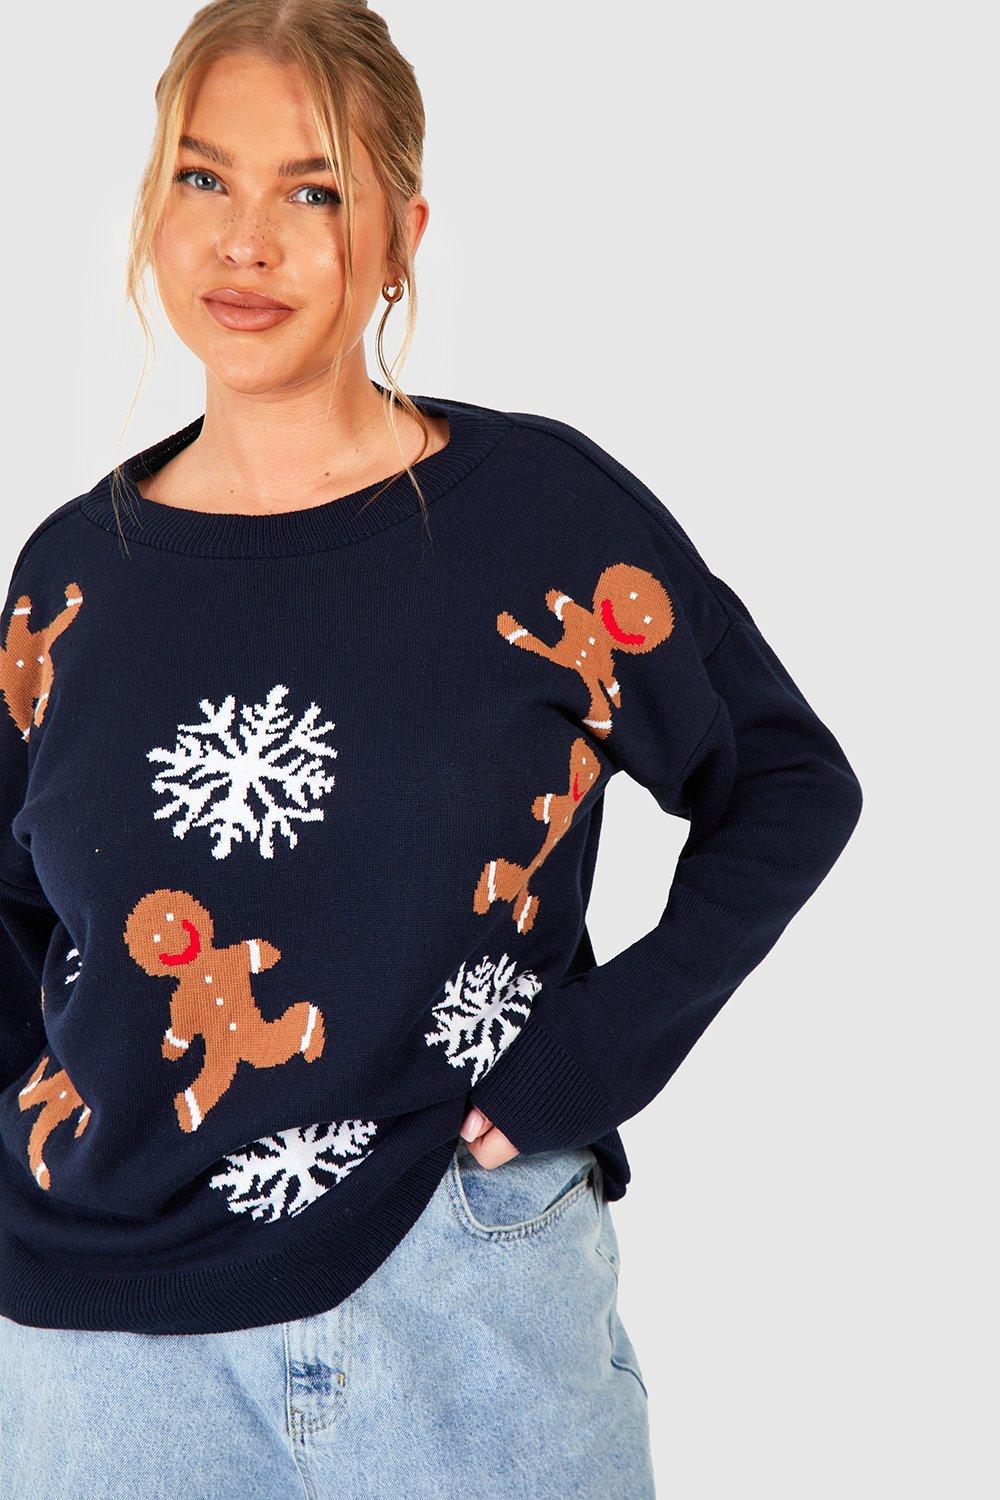 Women's Christmas Ugly Sweater Dress, Gingerbread Snowman Sweater